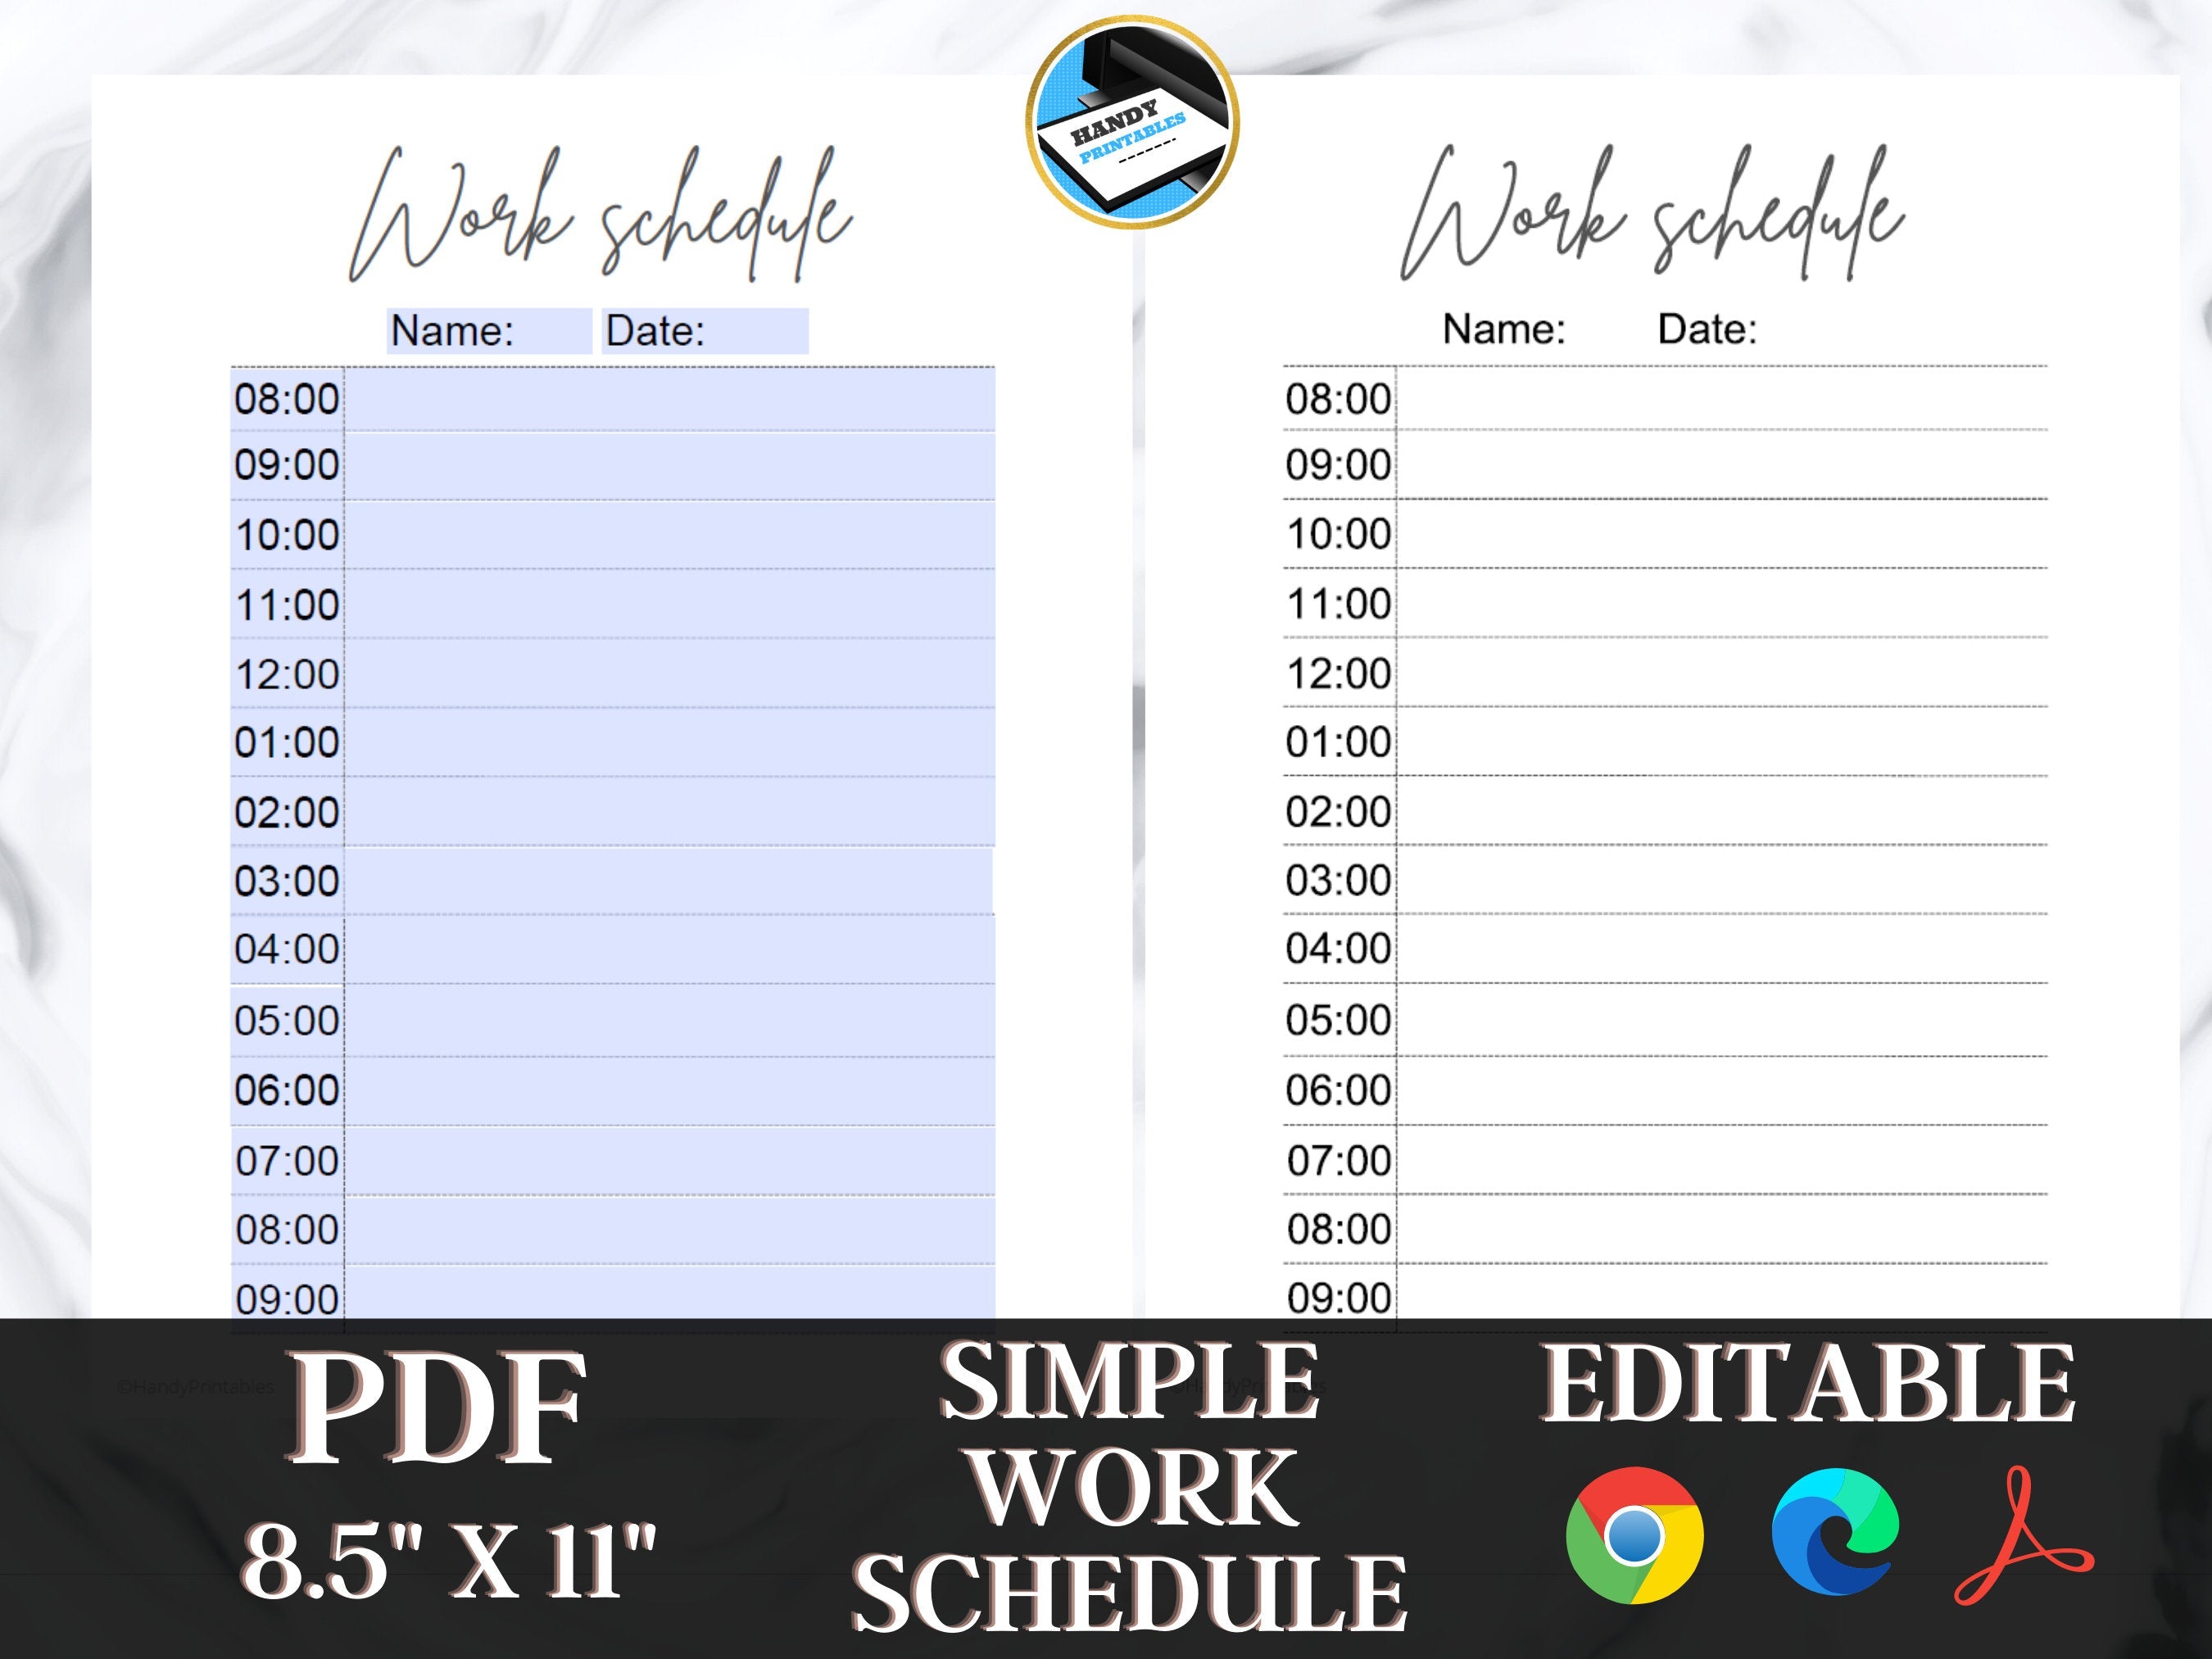 Simple Editable Work Schedule, Printable Work Schedule, PDF Schedule, Schedule for Work, Daily Work Schedule, Instant Download, 8.5 x 11 - HandyPrintables